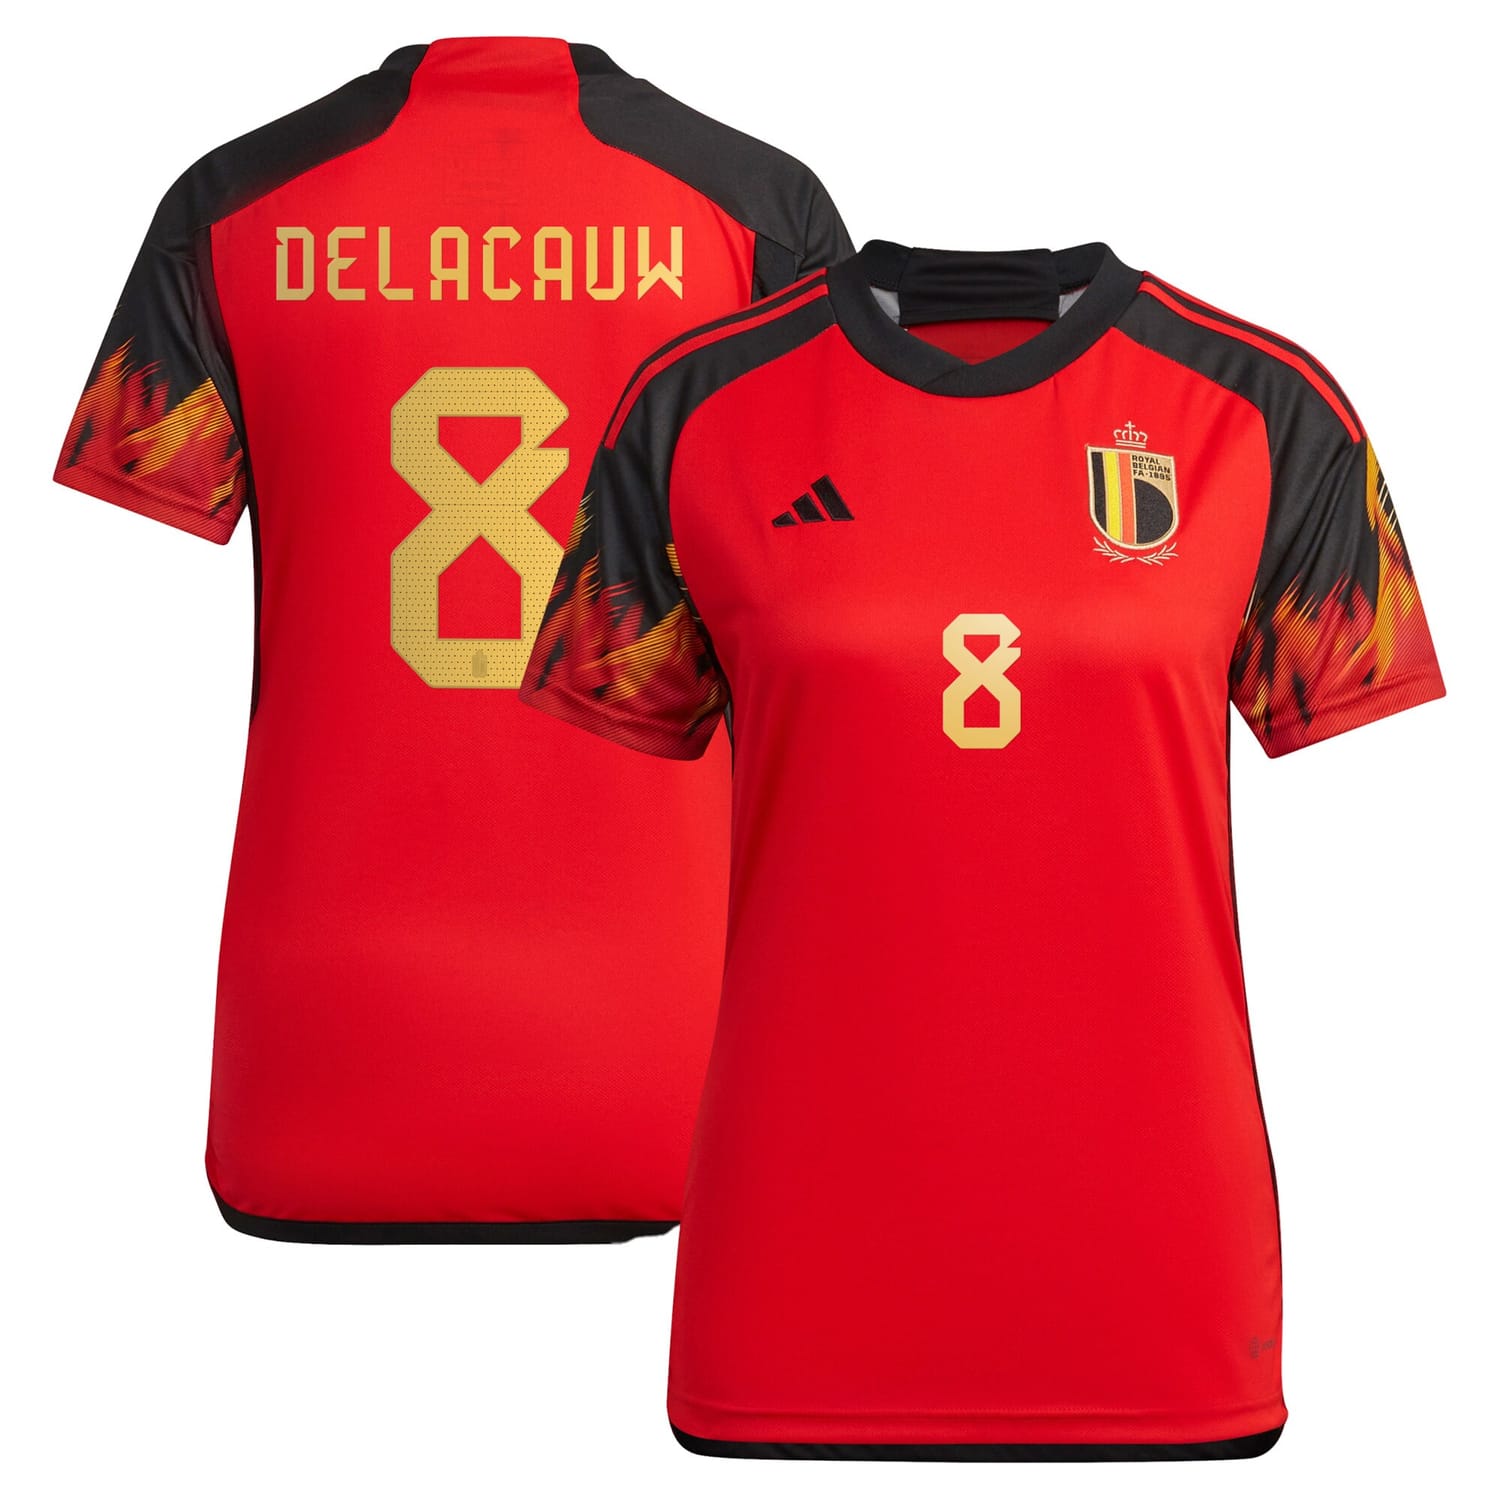 Belgium National Team Home Jersey Shirt 2022 player Féli Delacauw 8 printing for Women